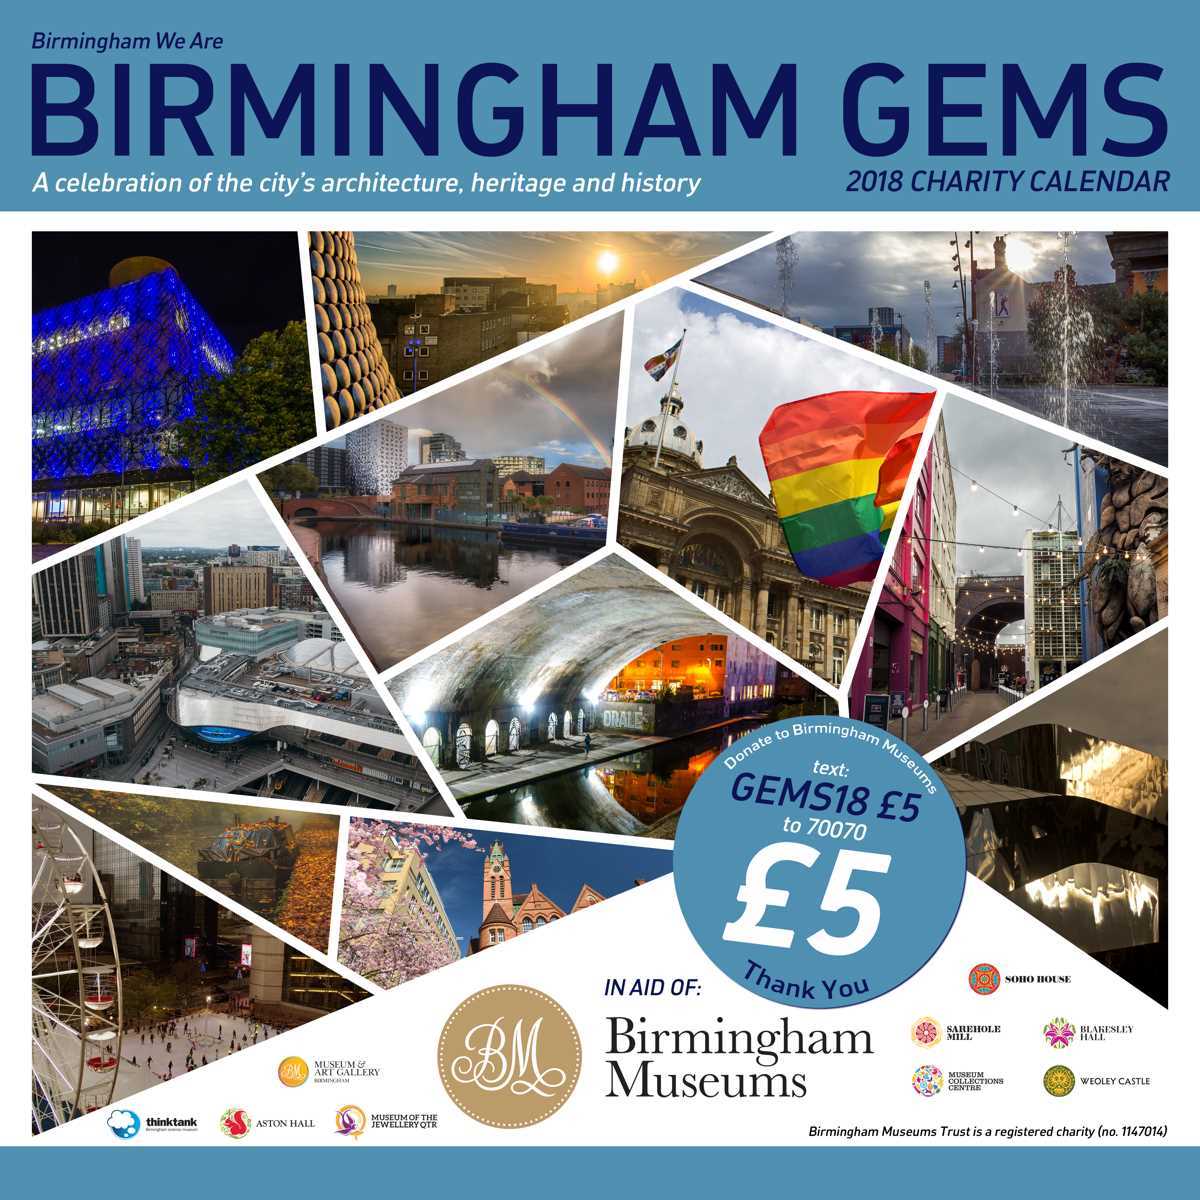 Birmingham Gems calendar for 2018 - it's arrived!